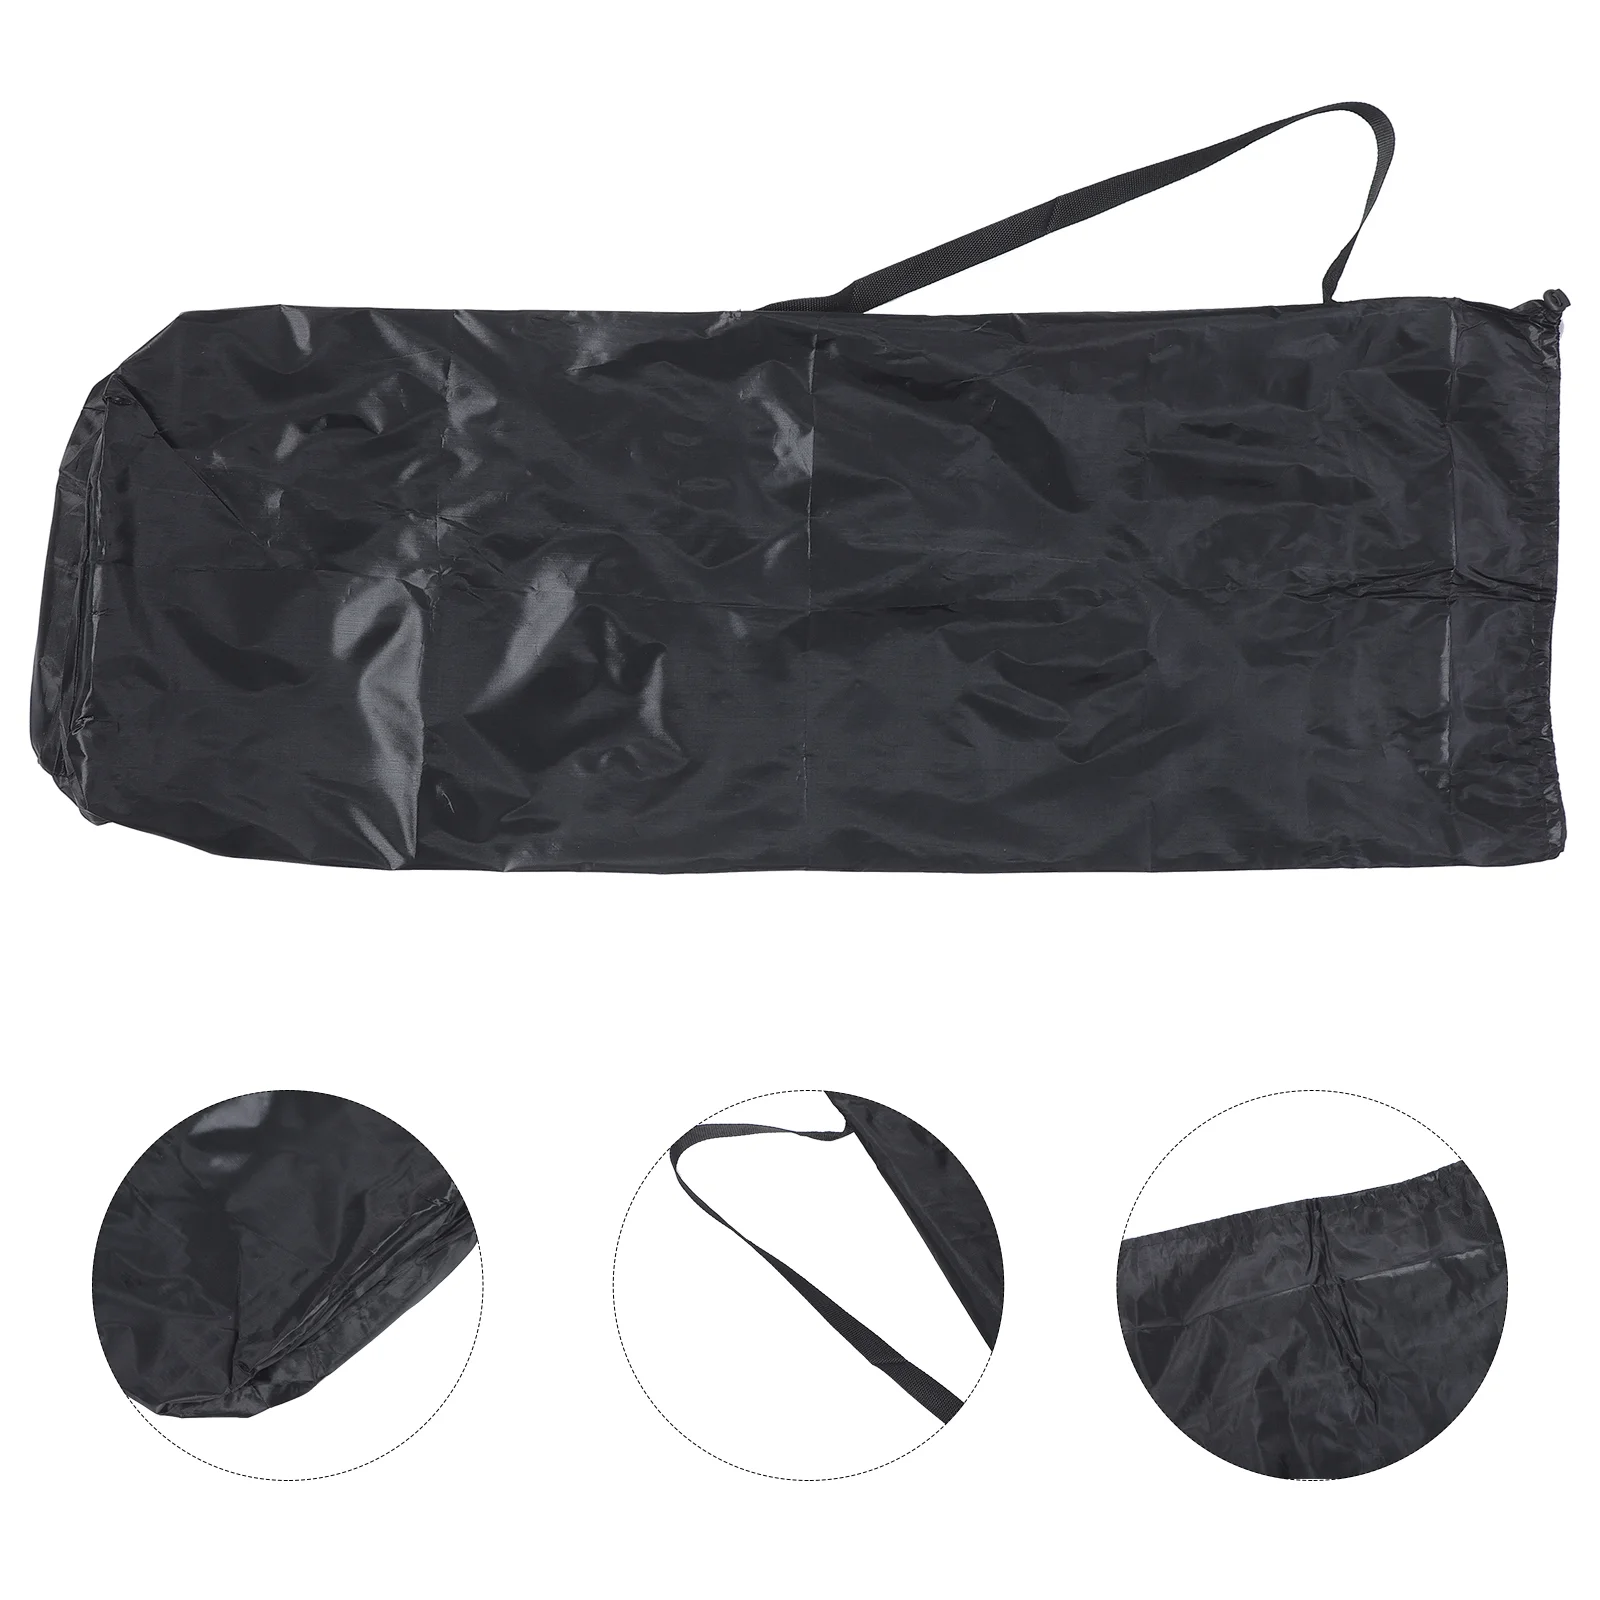 

Stroller Storage Bag Airport Travel Accessories Gate Check Umbrella for Airplane Foldable Umbrellas Rain